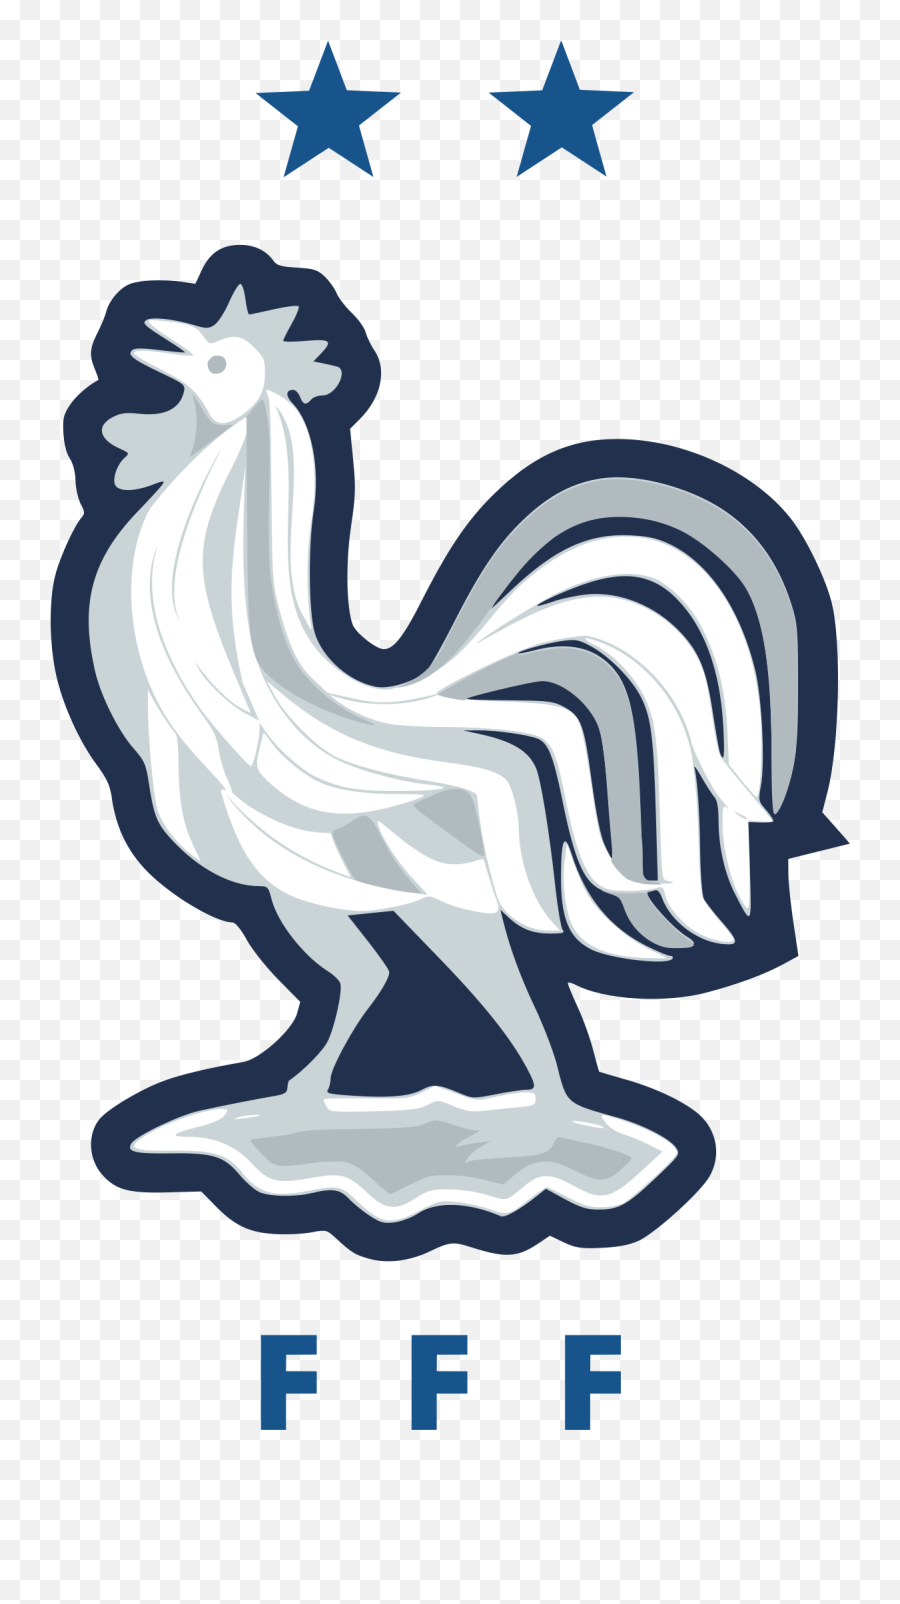 France National Football Team - Wikipedia France National Football Team Emoji,Football Logo Guiz